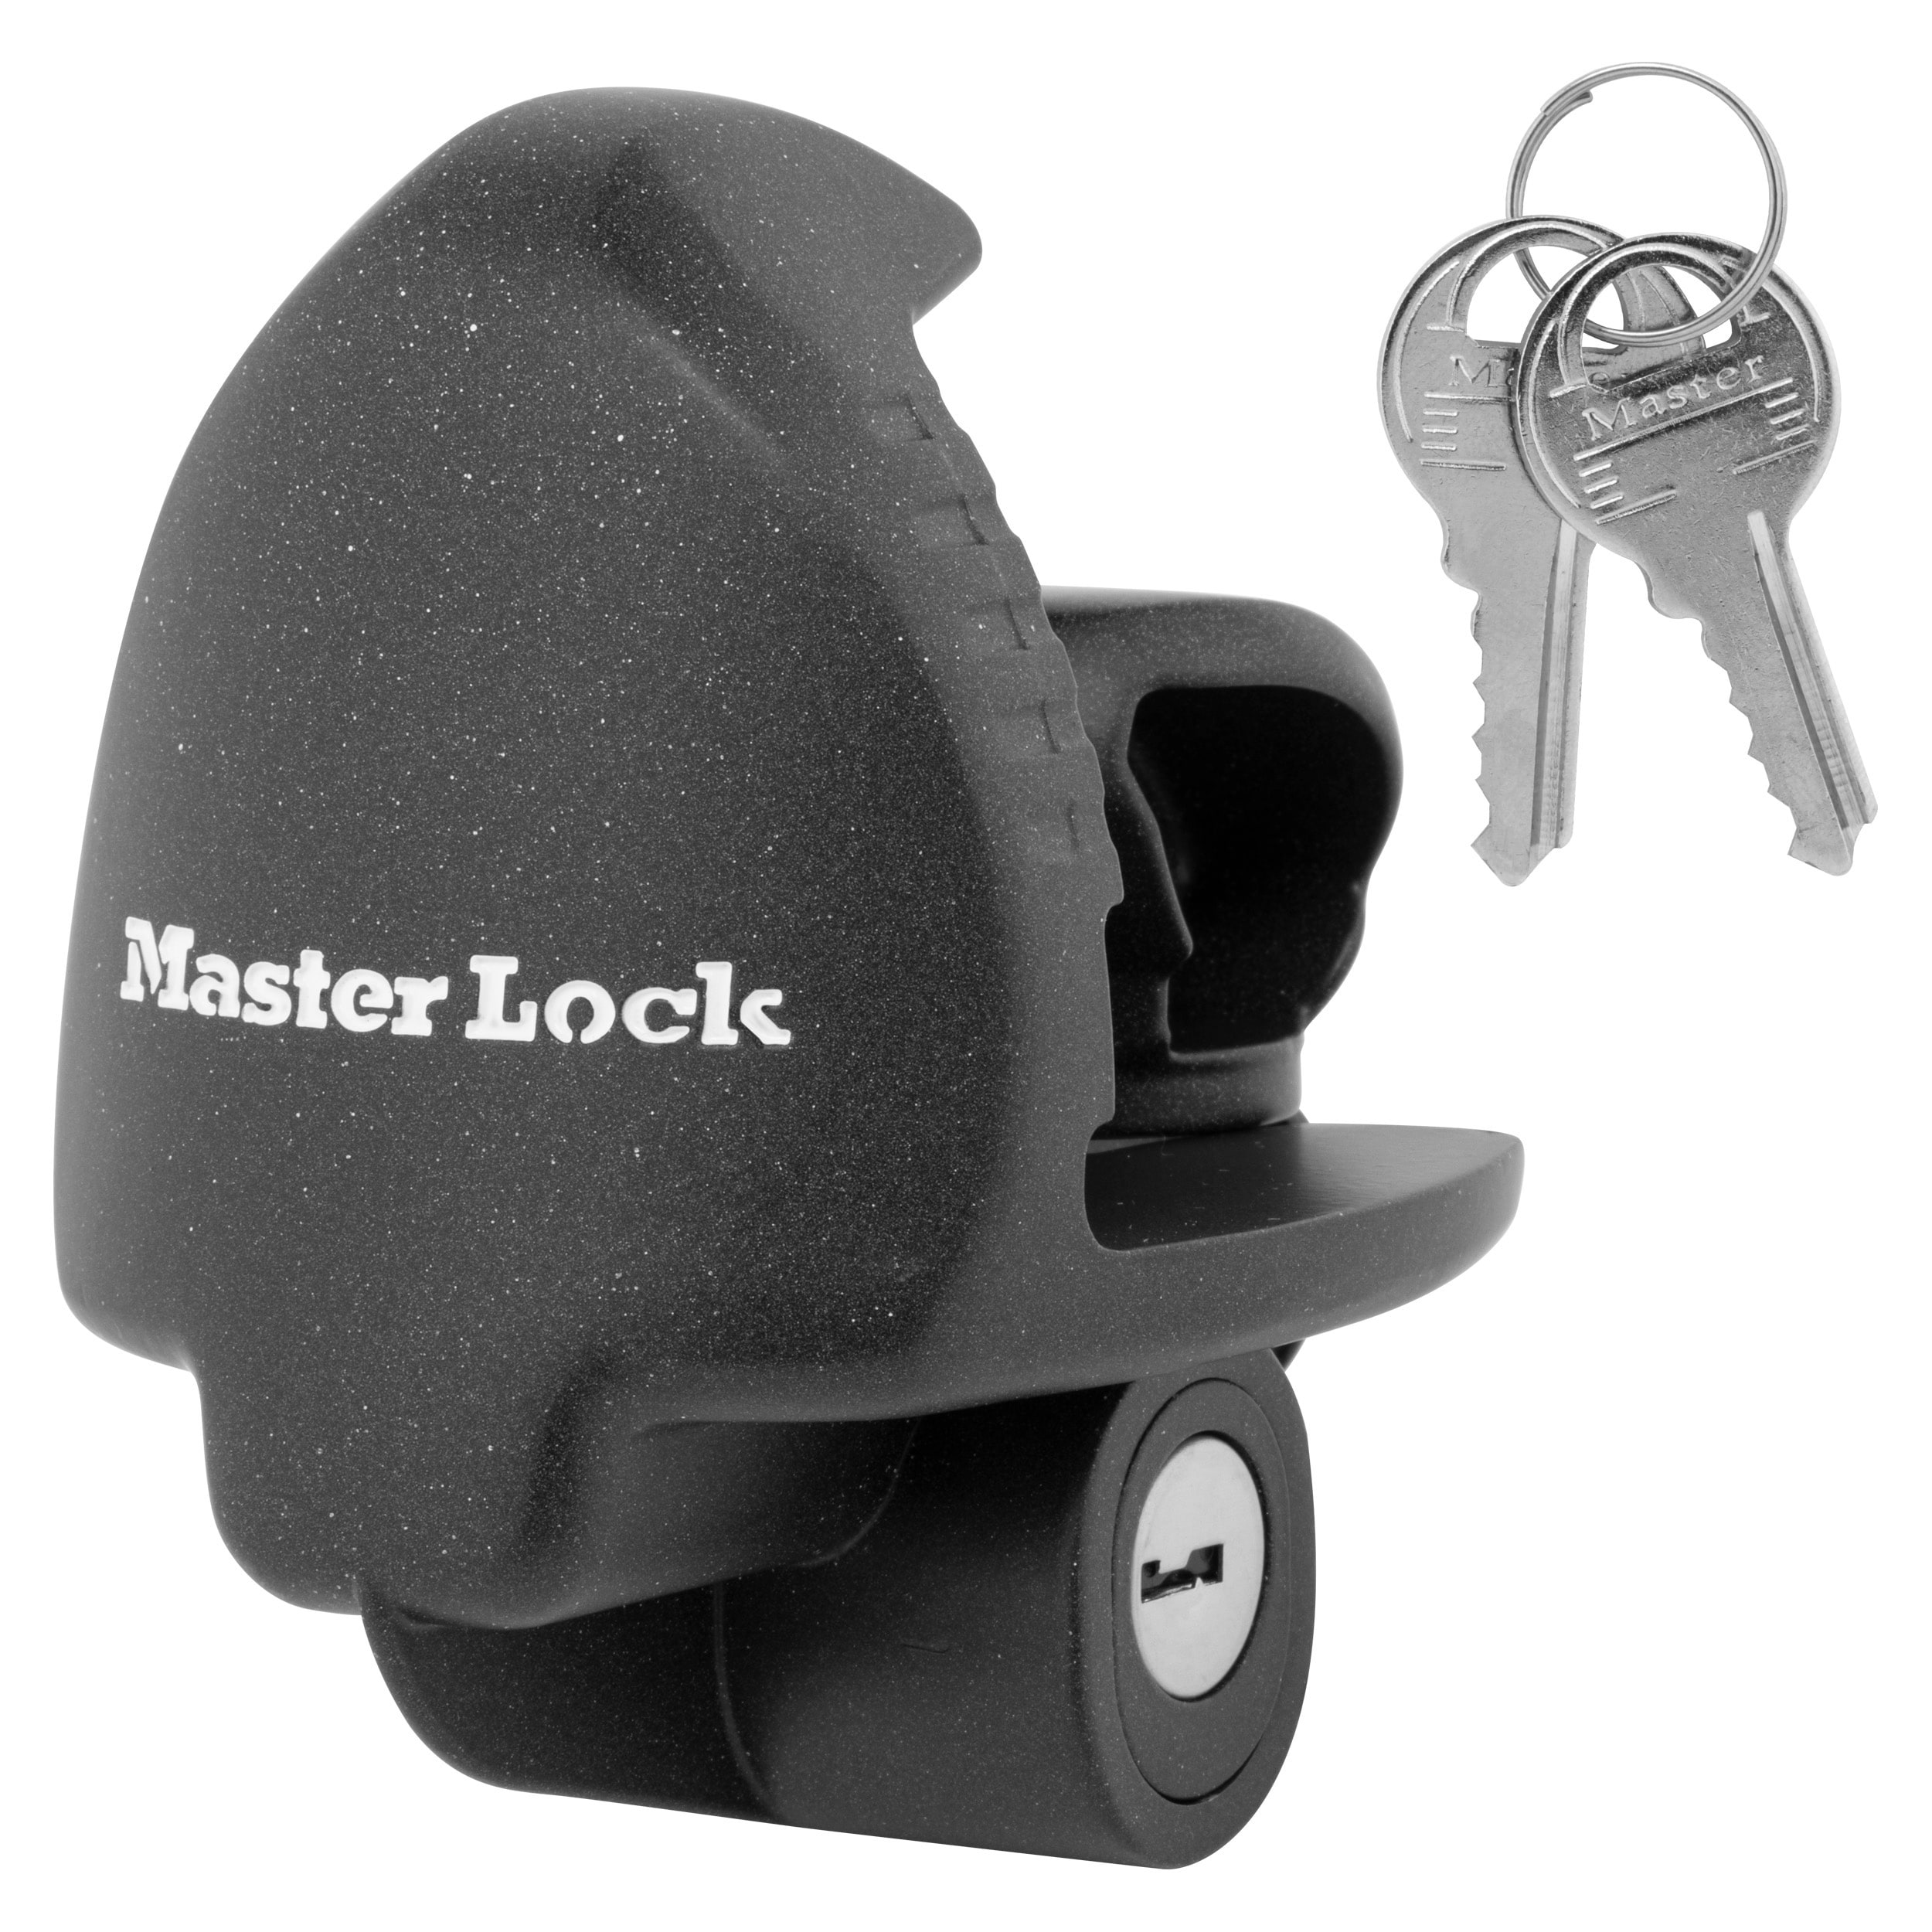 Master Lock Trailer Accessories at